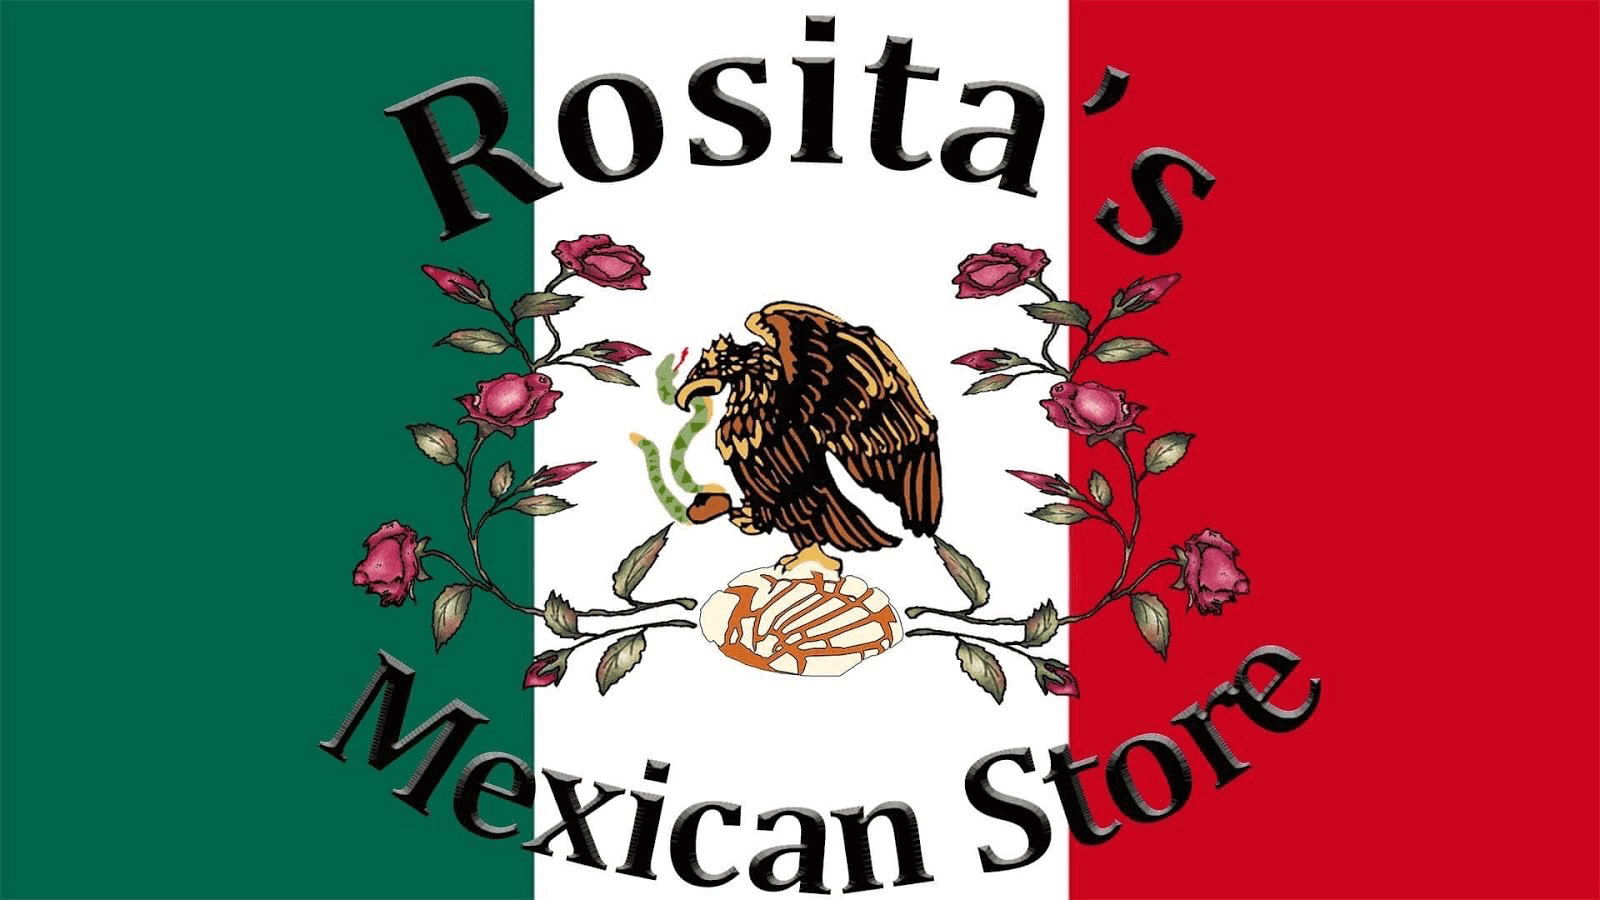 Rosita's Mexican Store logo top